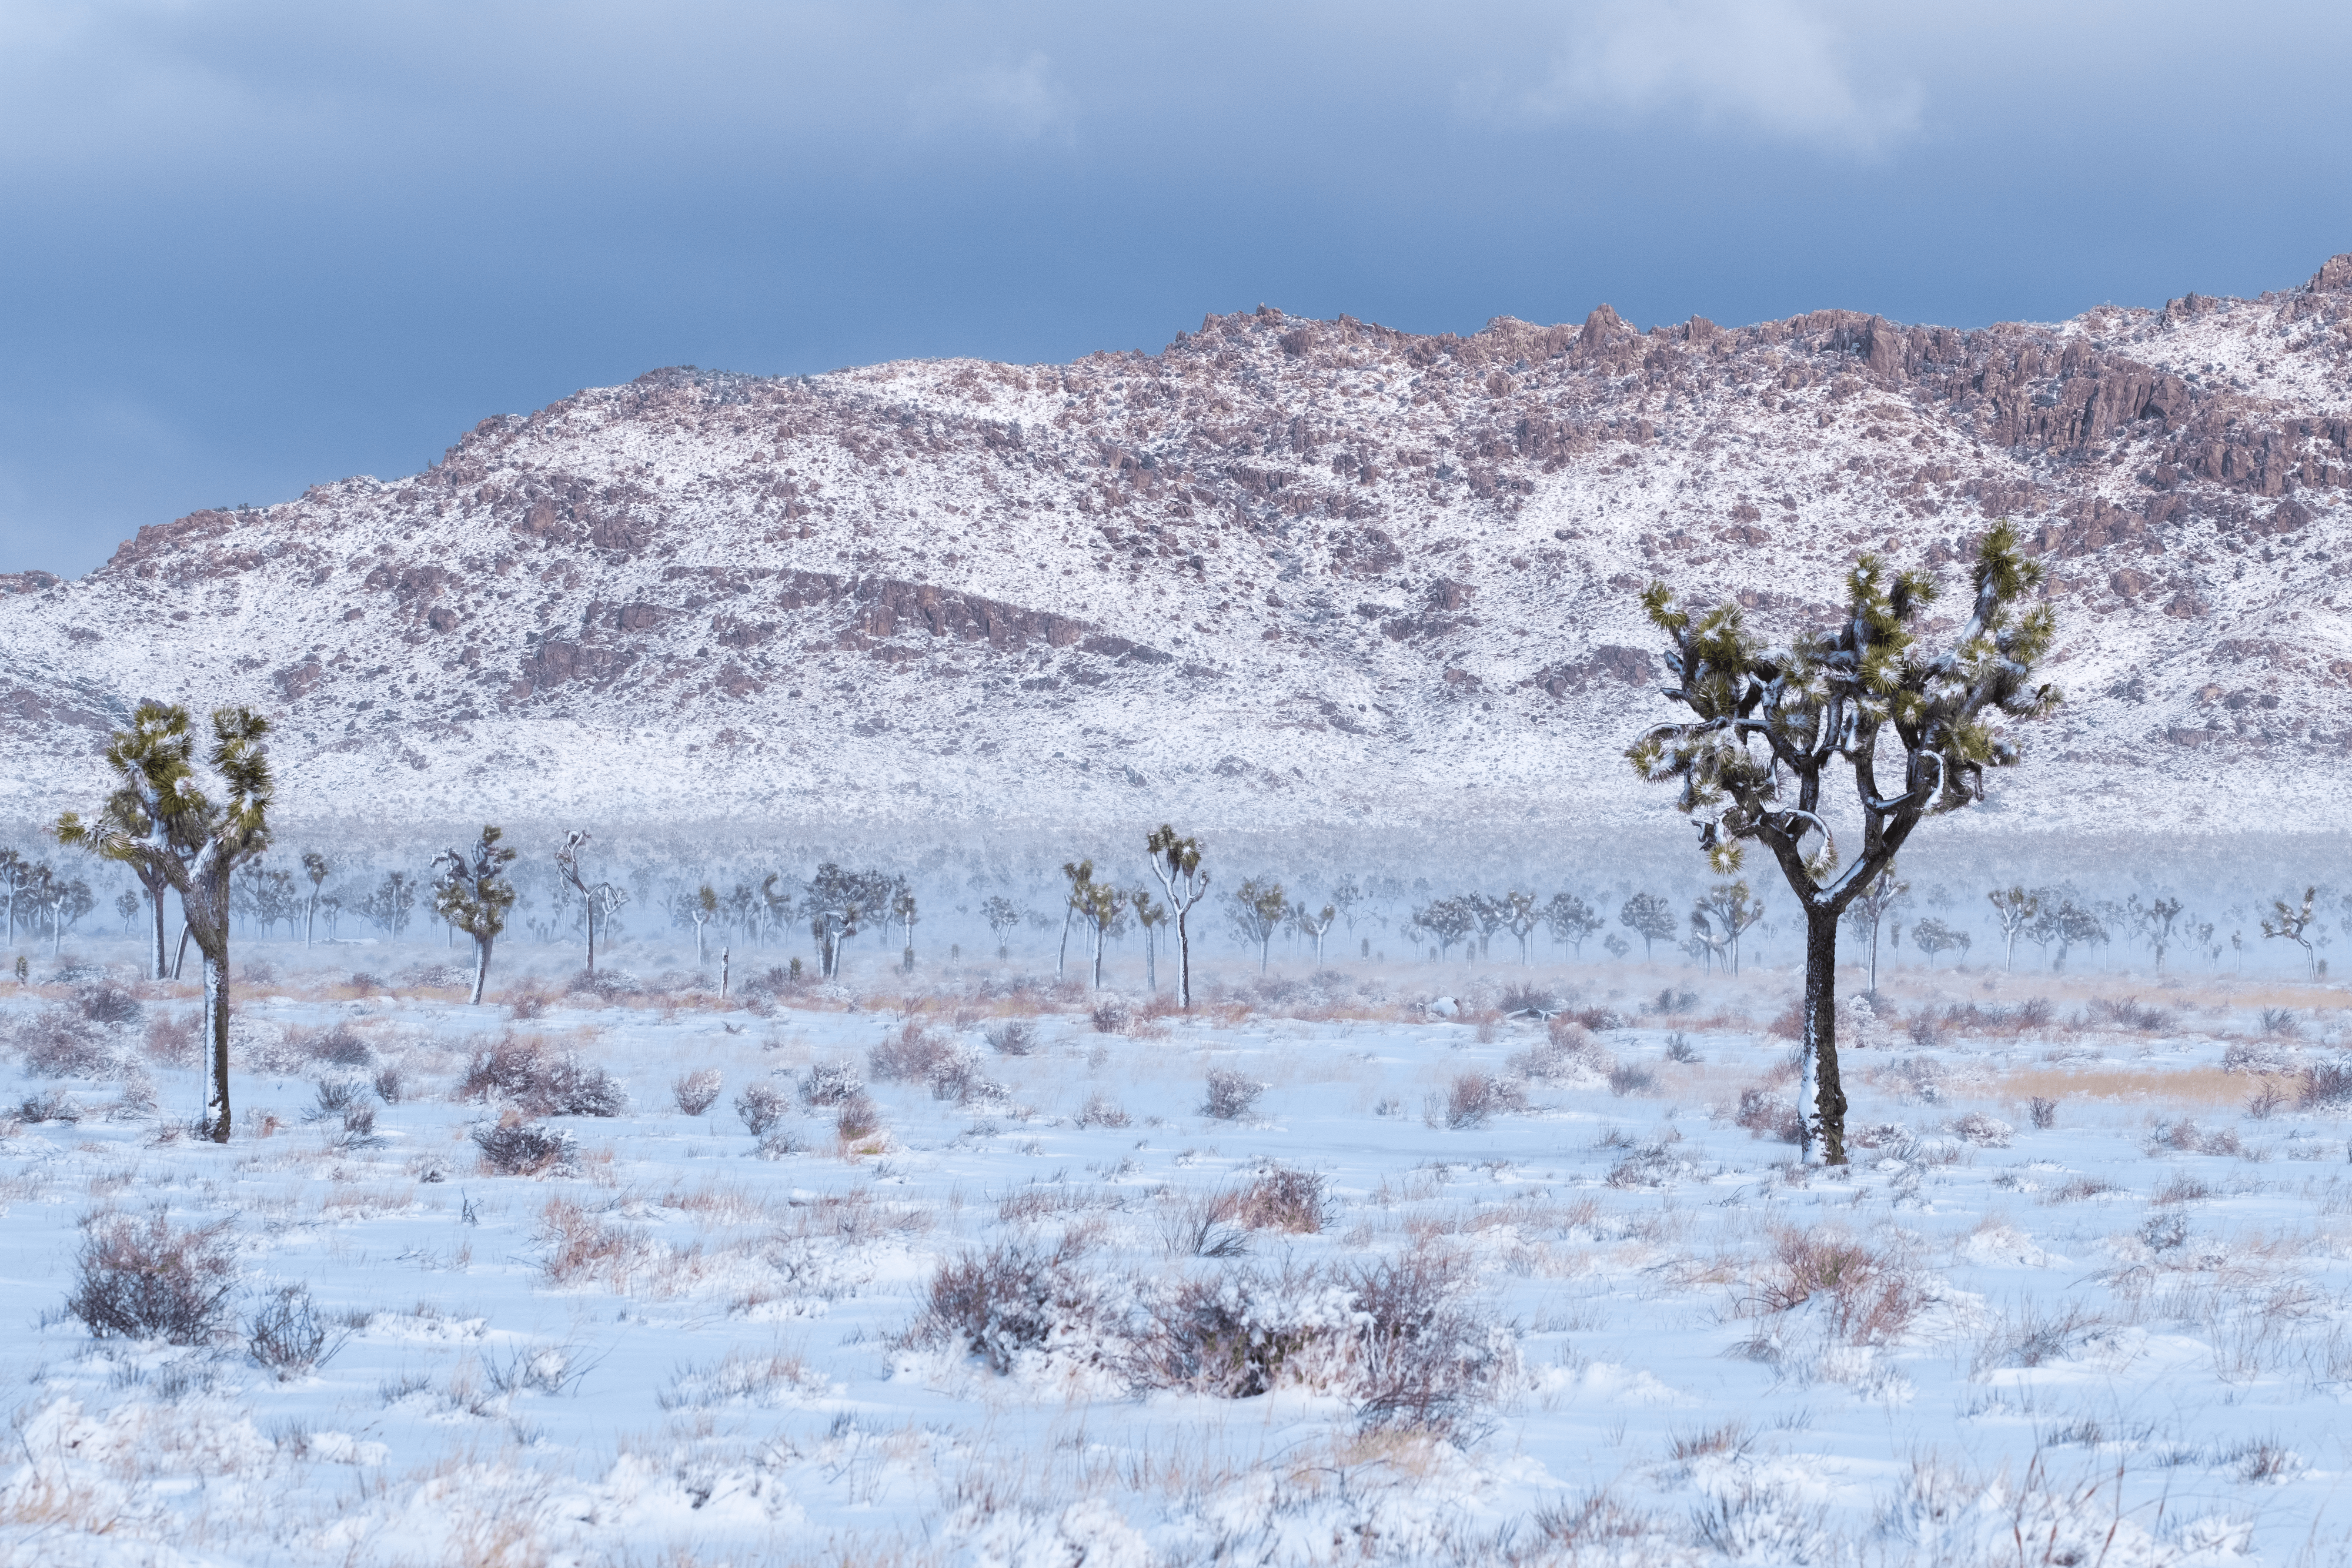 Joshua Tree in Winter #49